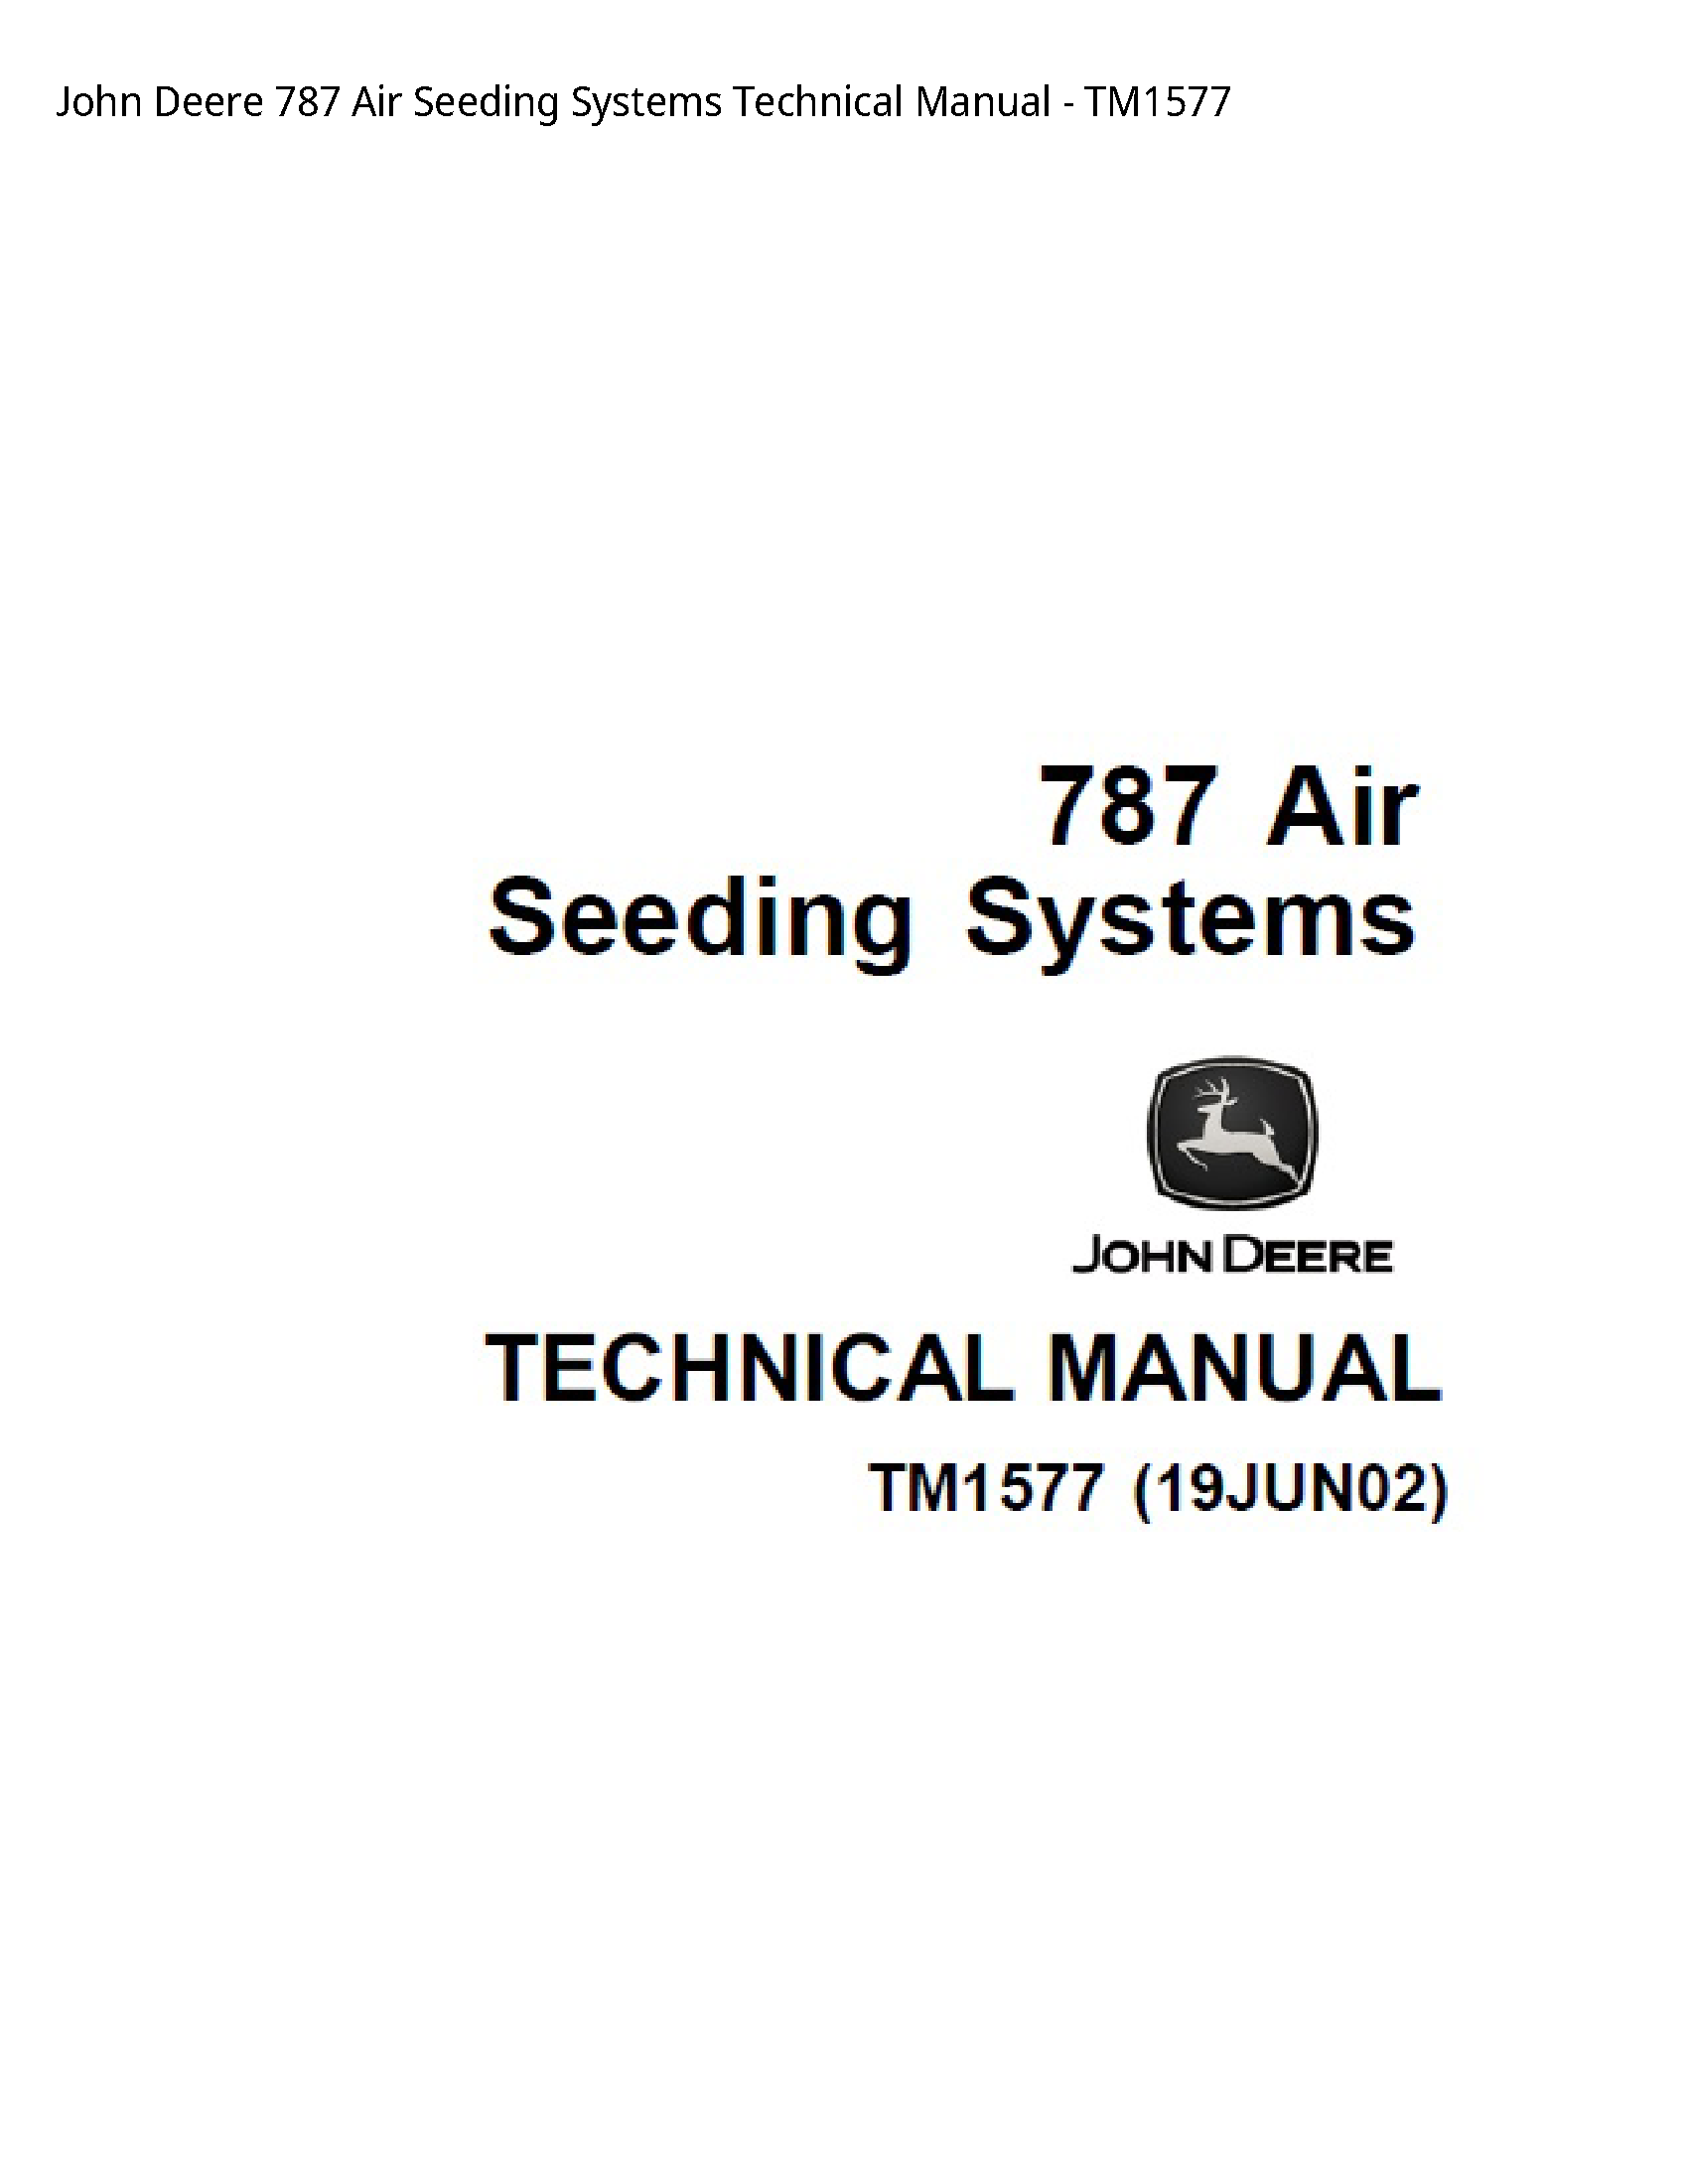 John Deere 787 Air Seeding Systems Technical manual